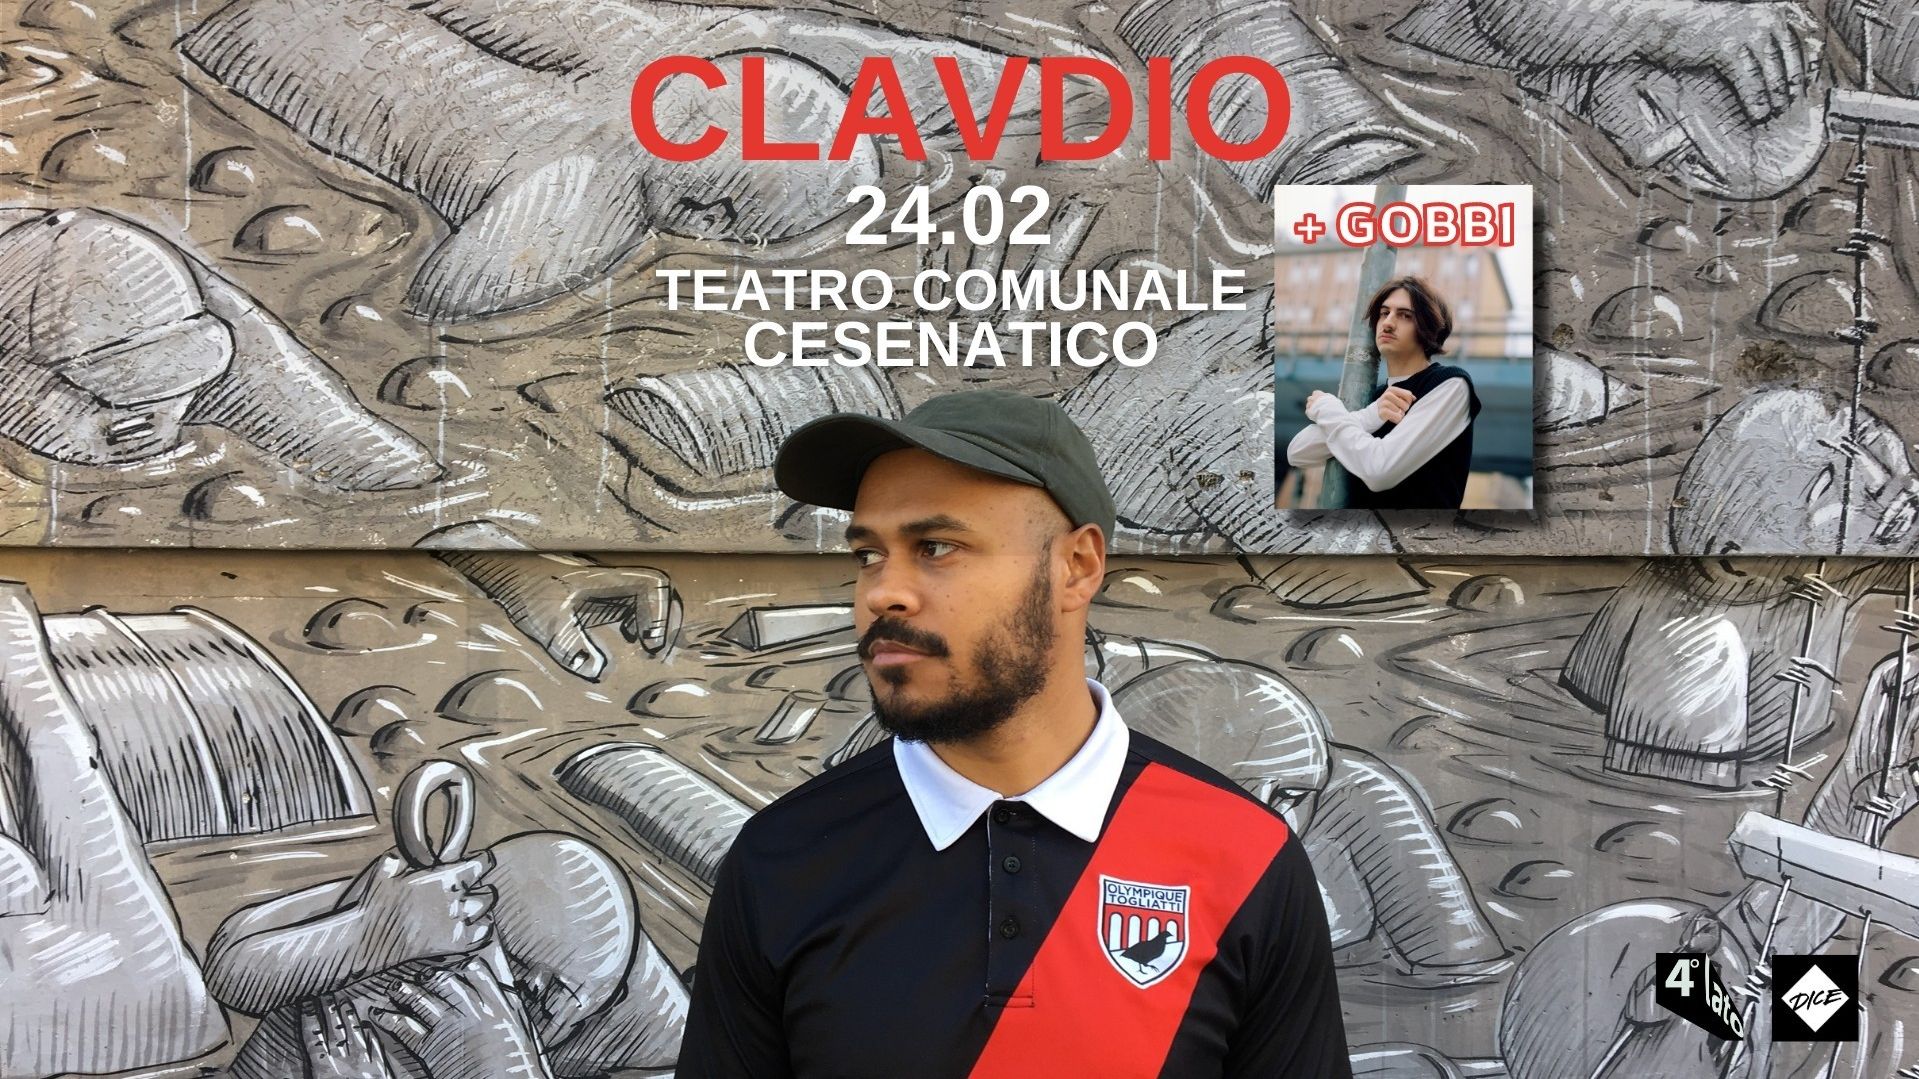 Clavdio + Gobbi